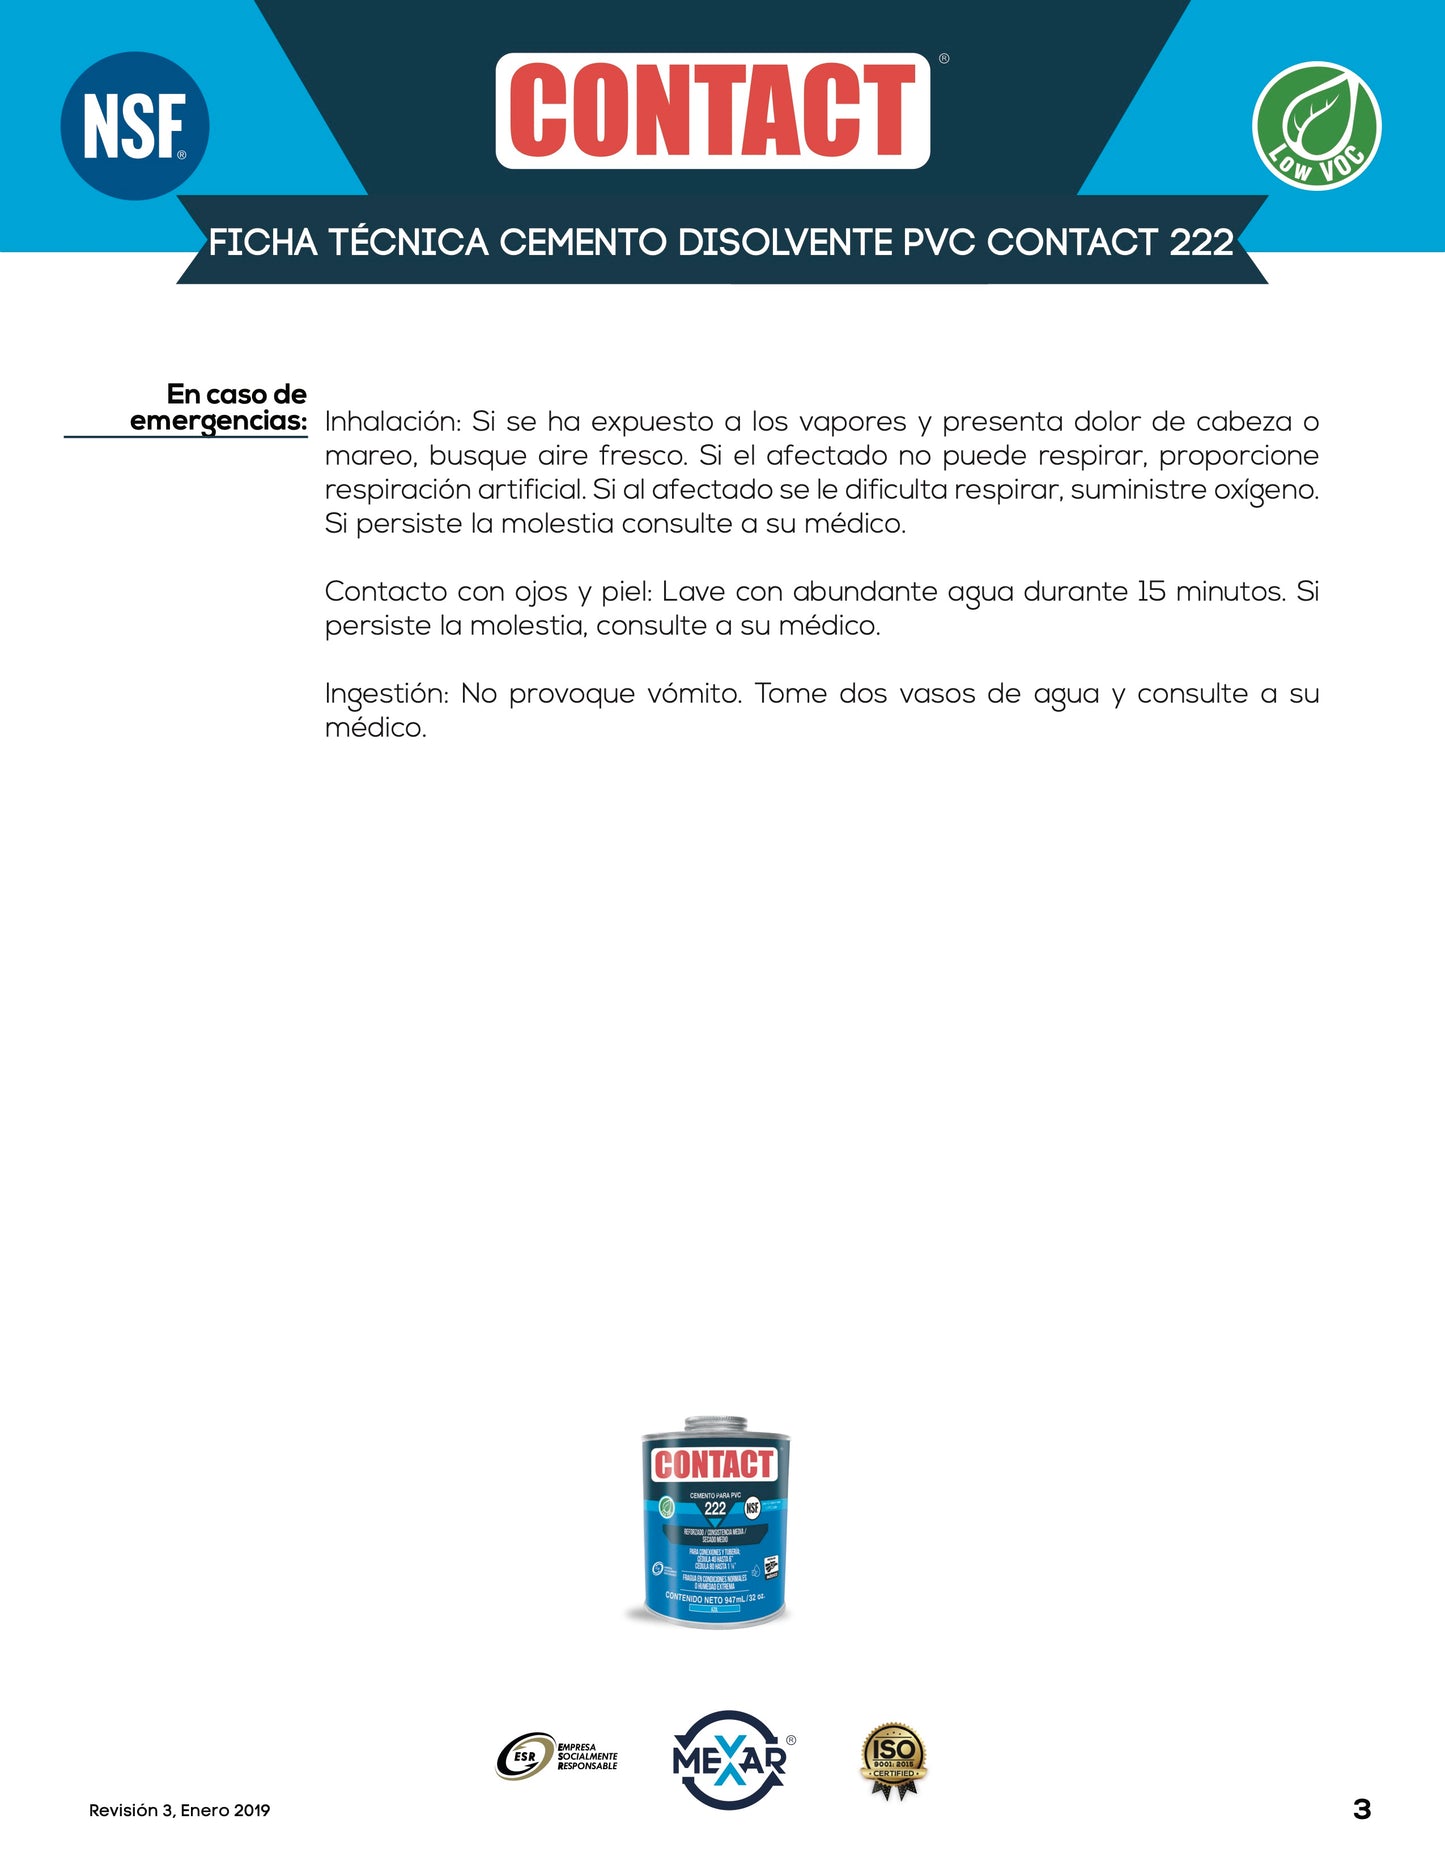 Pegamento Para PVC CONTACT 222 1 Litro Condiciones Húmedas